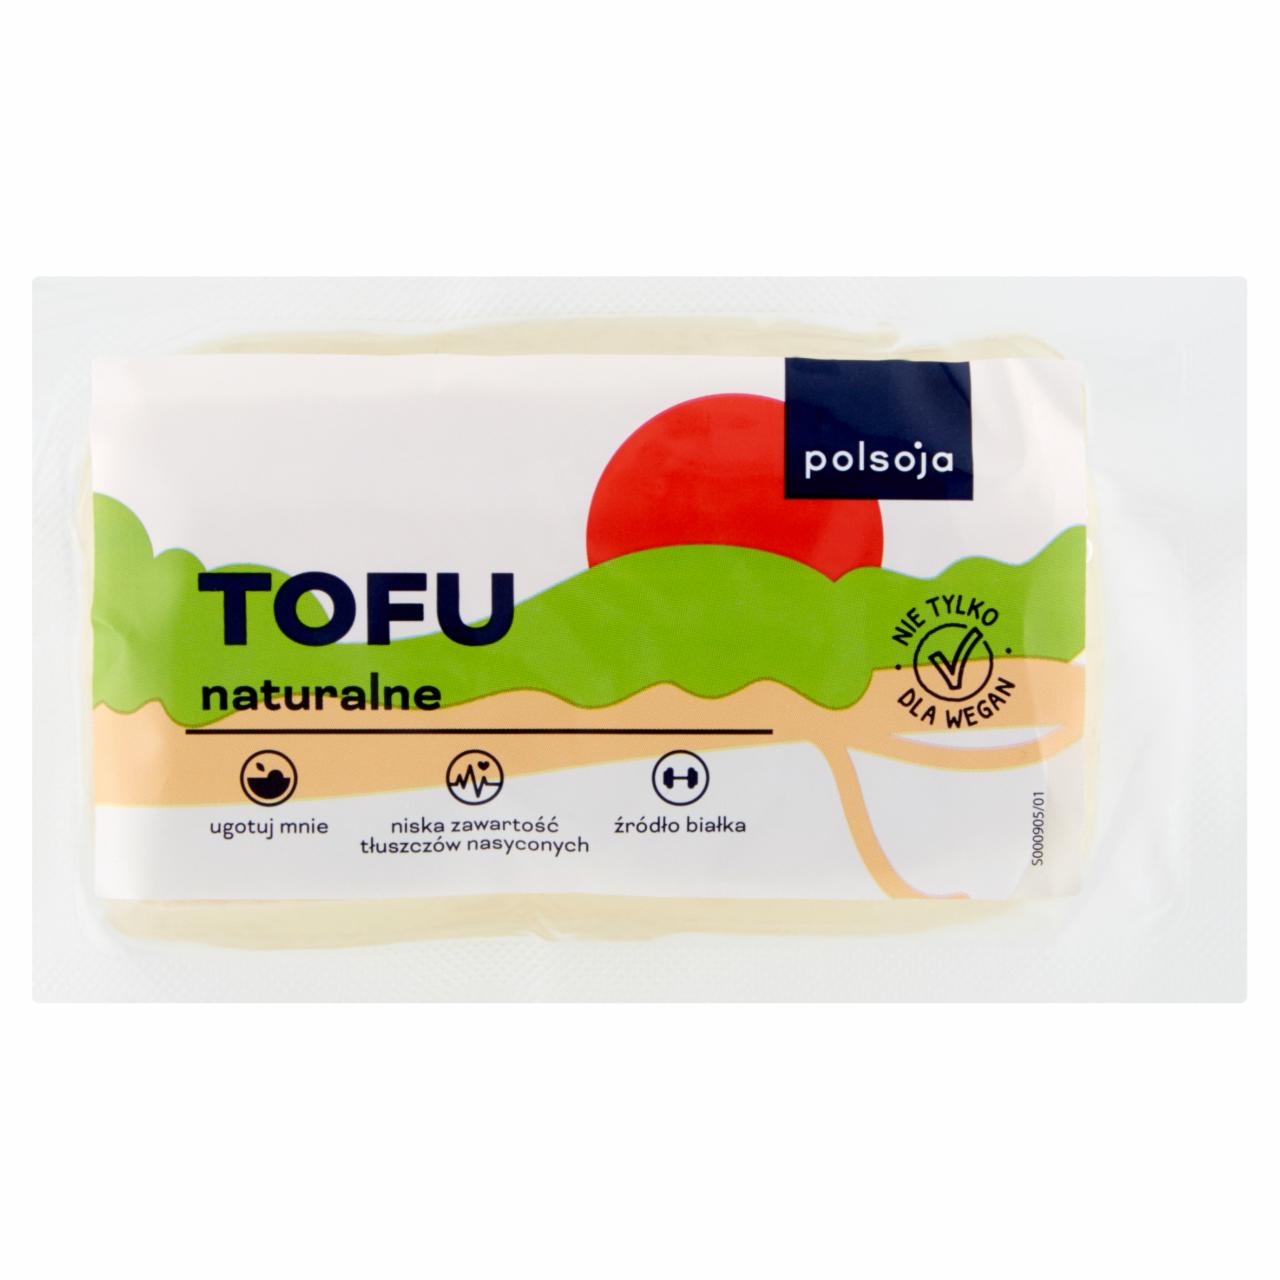 Фото - Tofu naturalne Polsoja